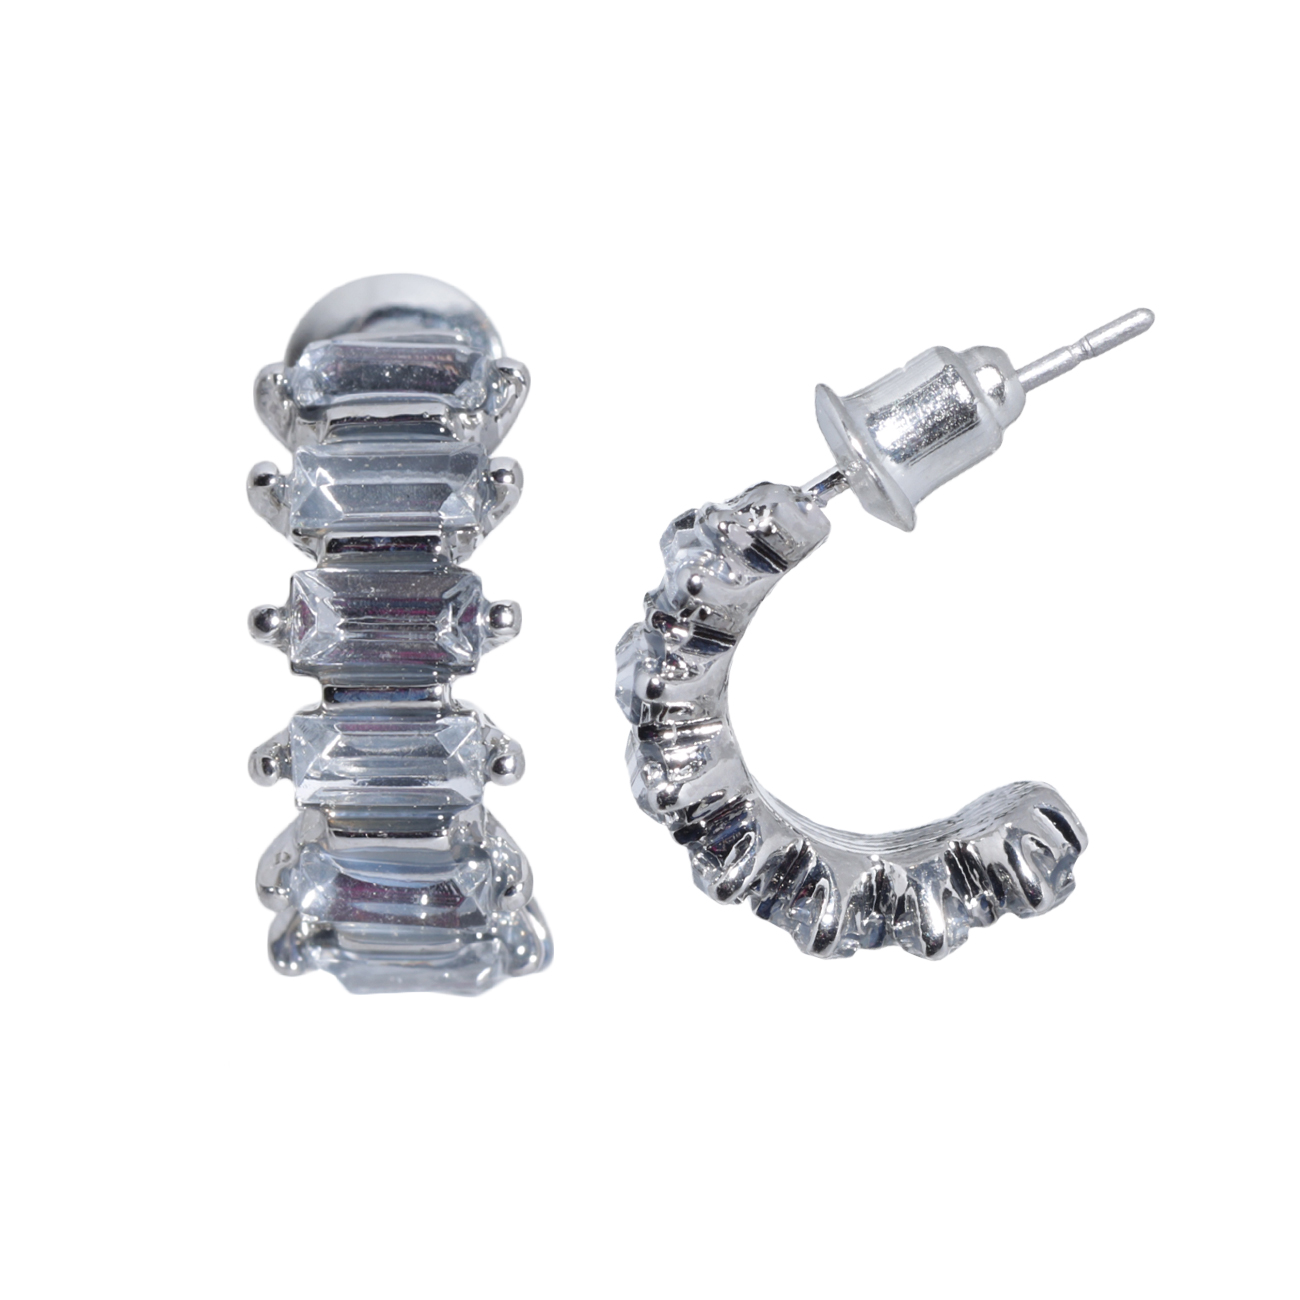 Stud earrings, 1 cm, 2 pieces, metal / acrylic, Silver, Crystals, Jewelry crystal изображение № 2